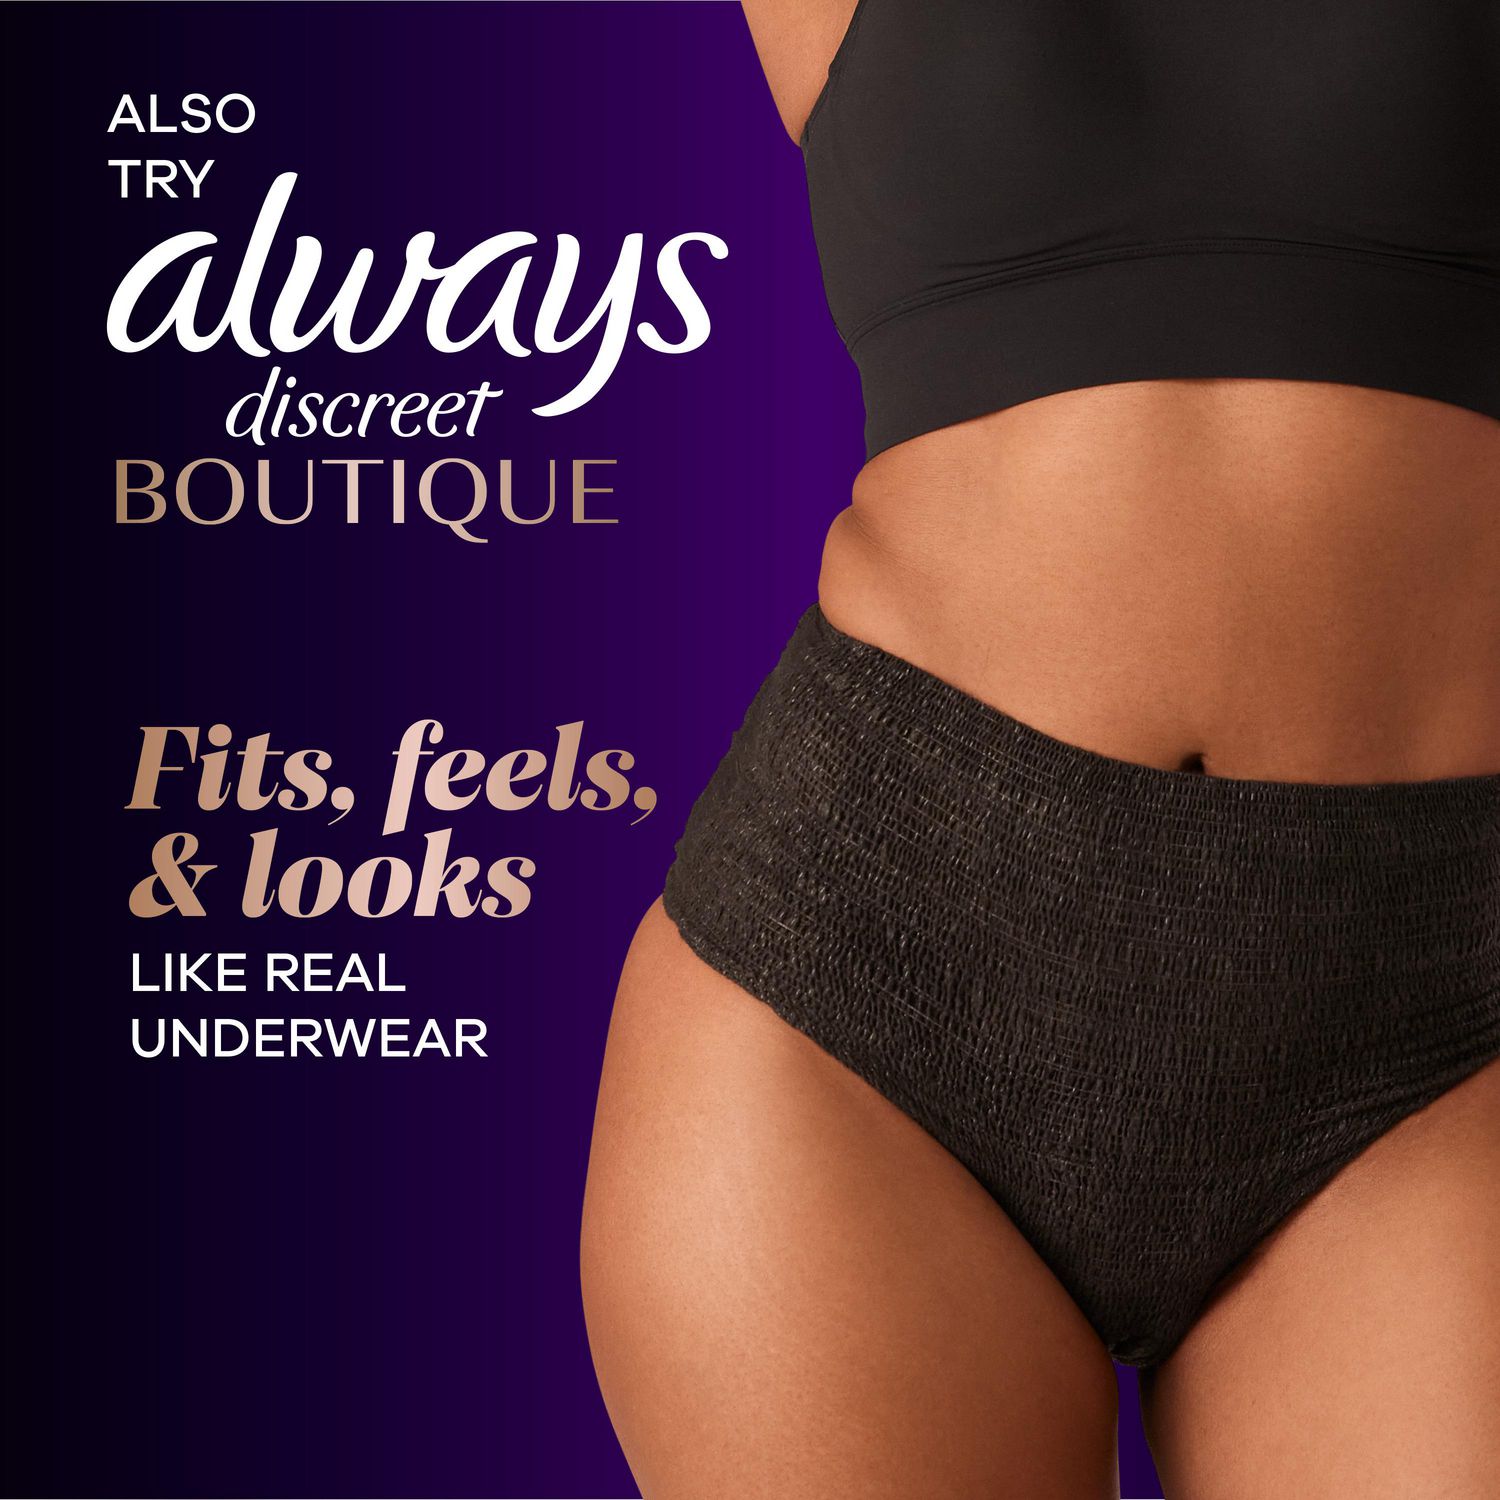 Always Discreet Underwear, L  G (14-20) Maximum - Brookshire's